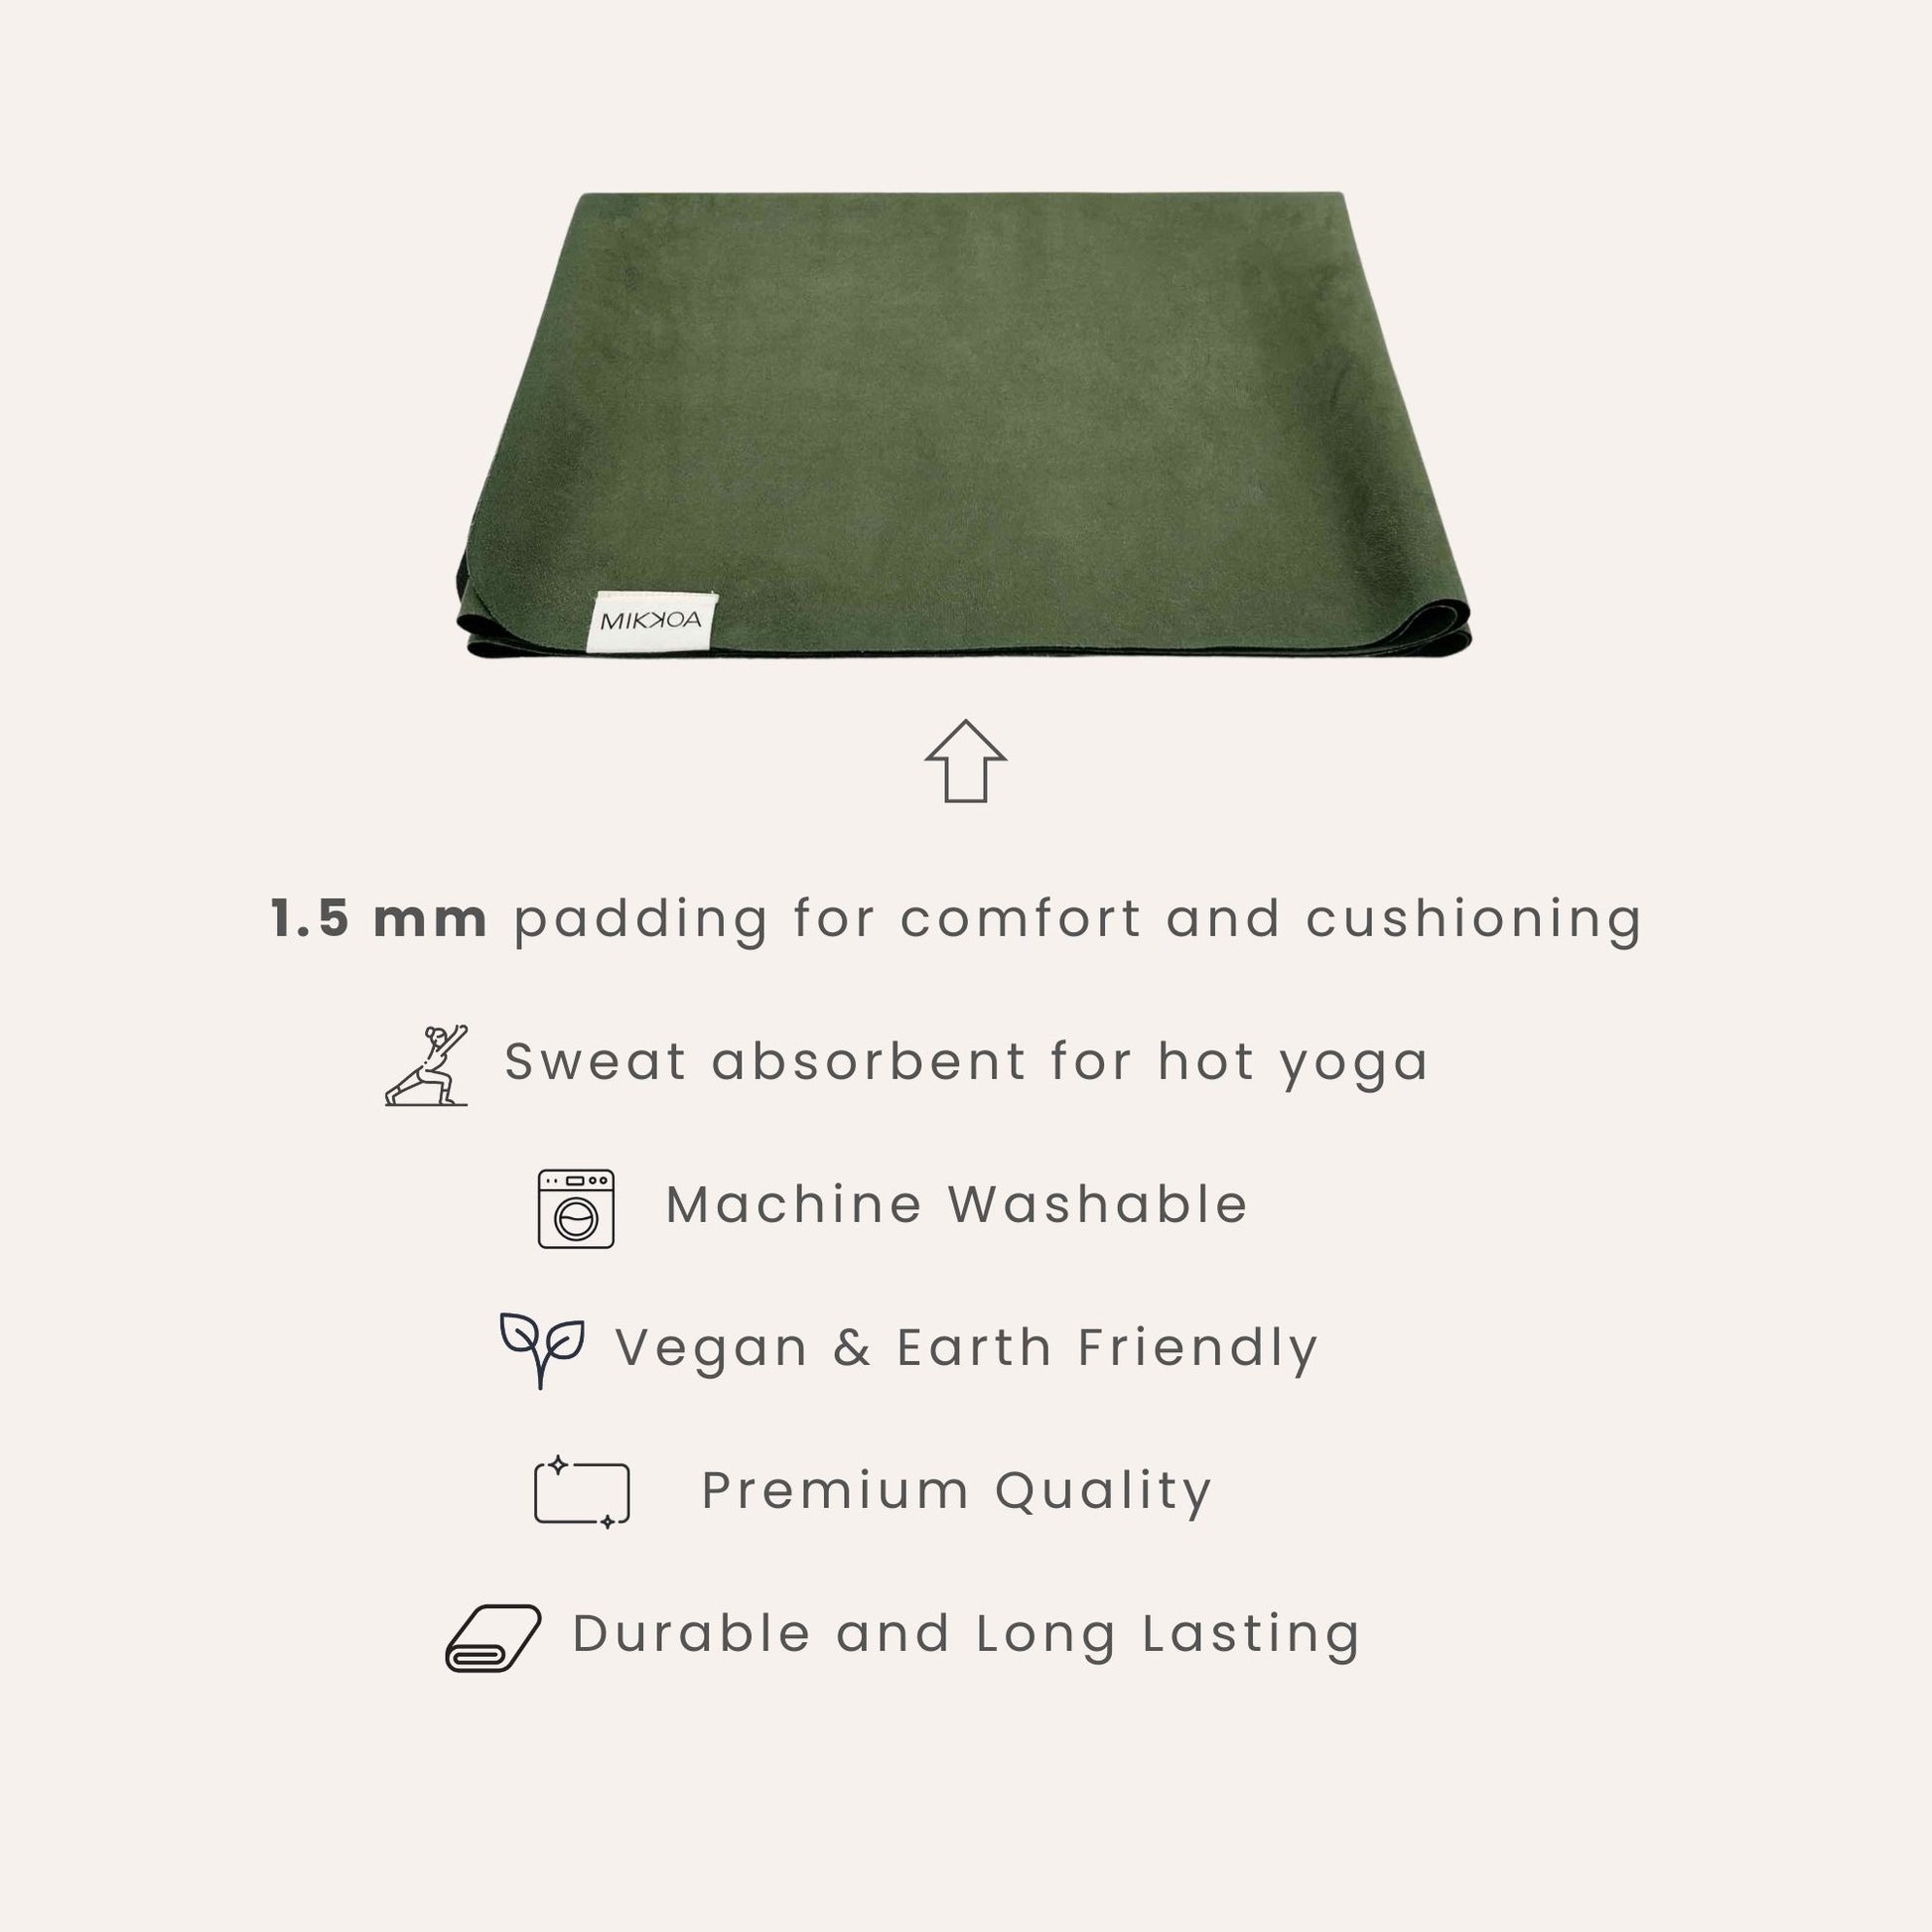 Ultrathin Yoga Mat-Folded Ultrathin Green Yoga Mat-Mikkoa Ultrathin Yoga Mat